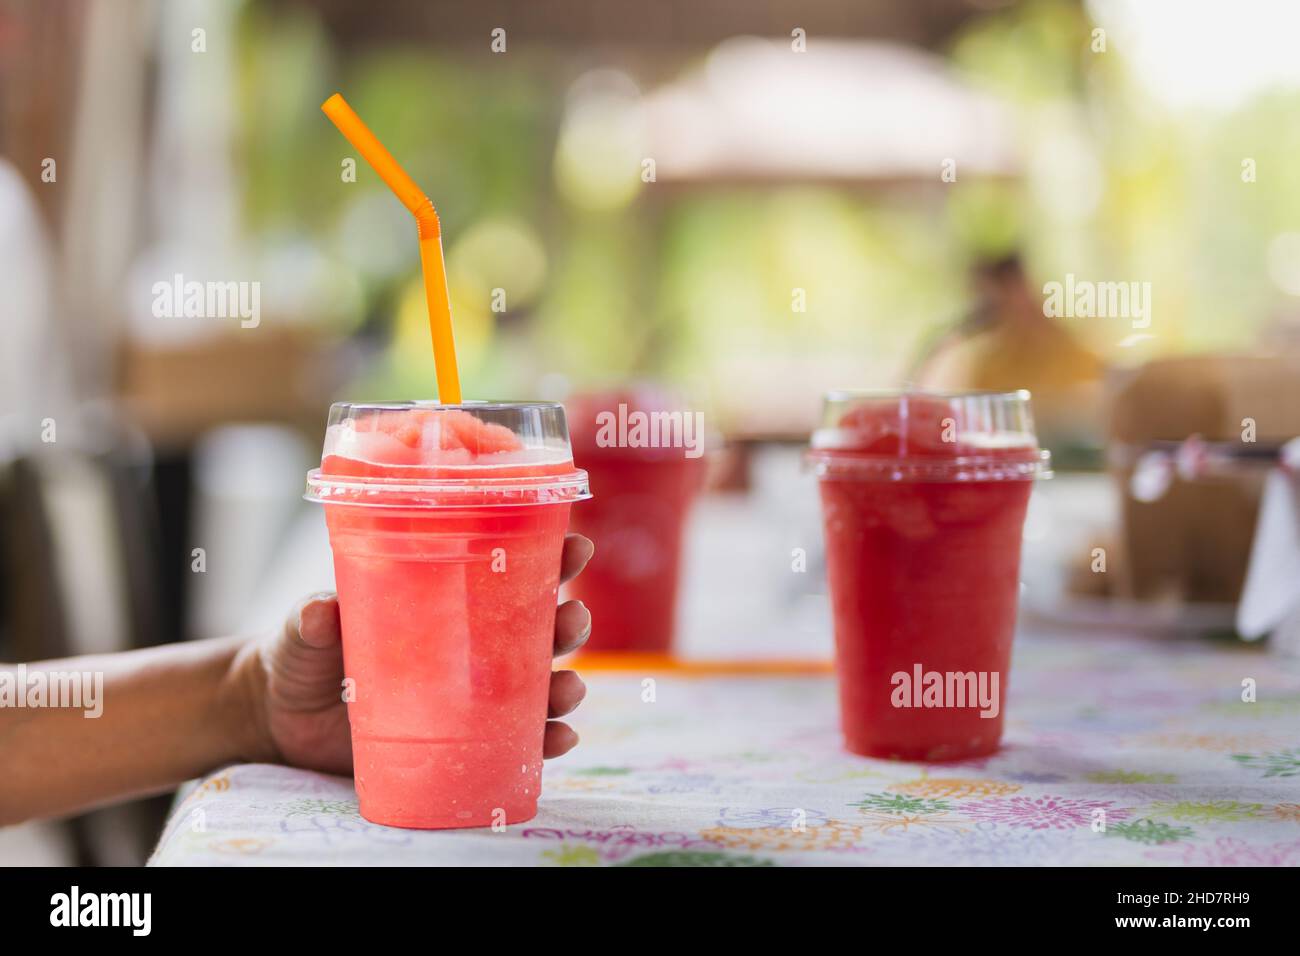 https://c8.alamy.com/comp/2HD7RH9/female-hand-holding-strawberry-smoothie-drink-in-plastic-cup-2HD7RH9.jpg